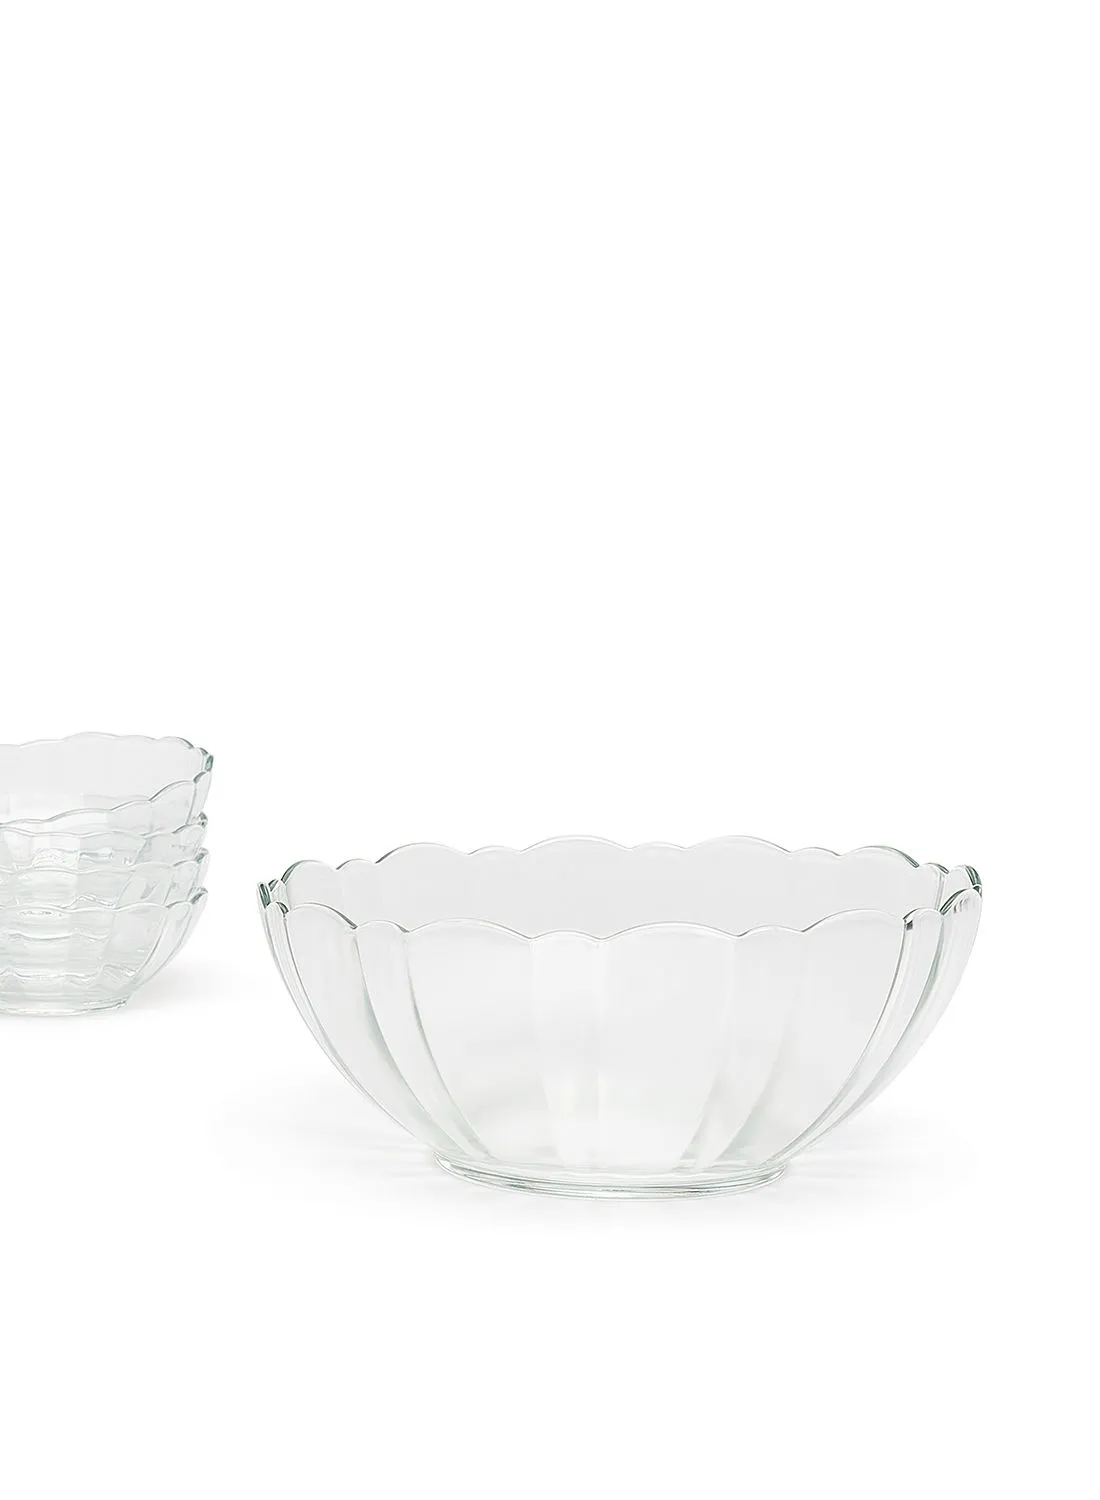 noon east 5 Piece Glass Bowl Set - Light Weight - For Dessert, Fruit, Snack, Soup, Salad - Bowl Set - Soup Set - Bowls - Soup Dishes - Mixing Bowl - Serving Bowl Serves4 - Clear